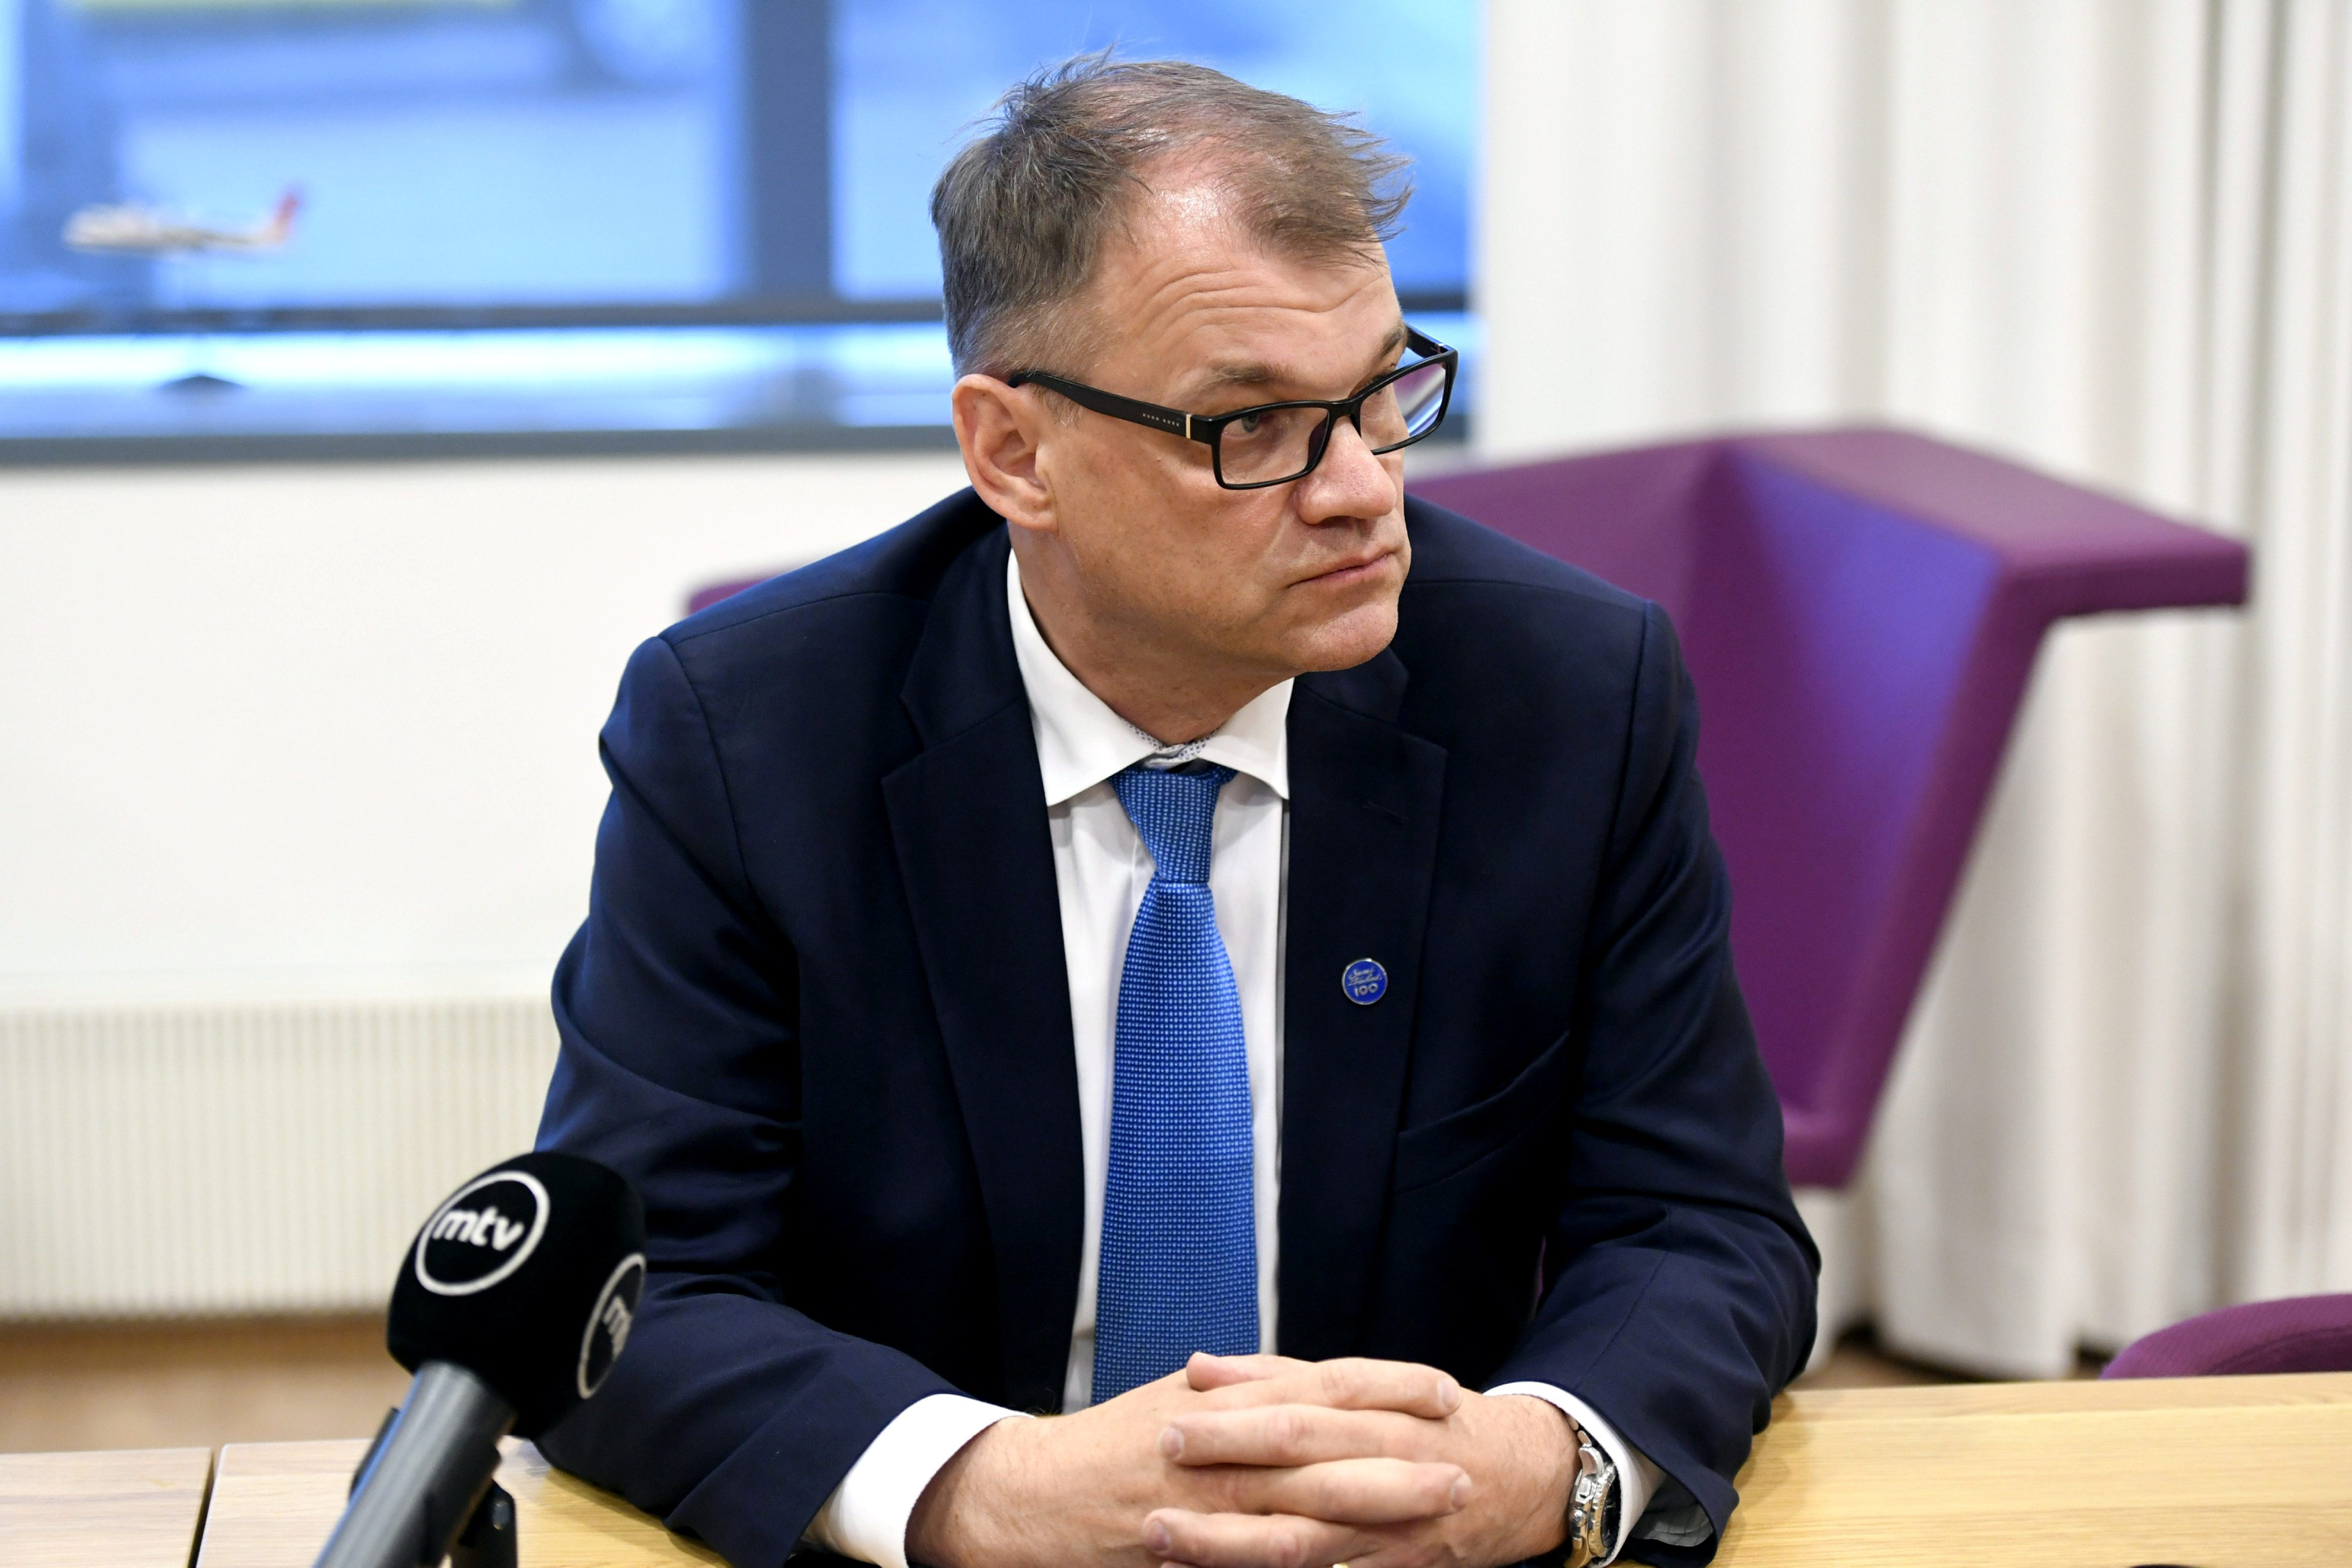 Finland's Prime Minister Juha Sipila (R) attends a news conference at the airport in Turku, Finland, June 13, 2017. (Lehtikuva/Heikki Saukkomaa/via Reuters)